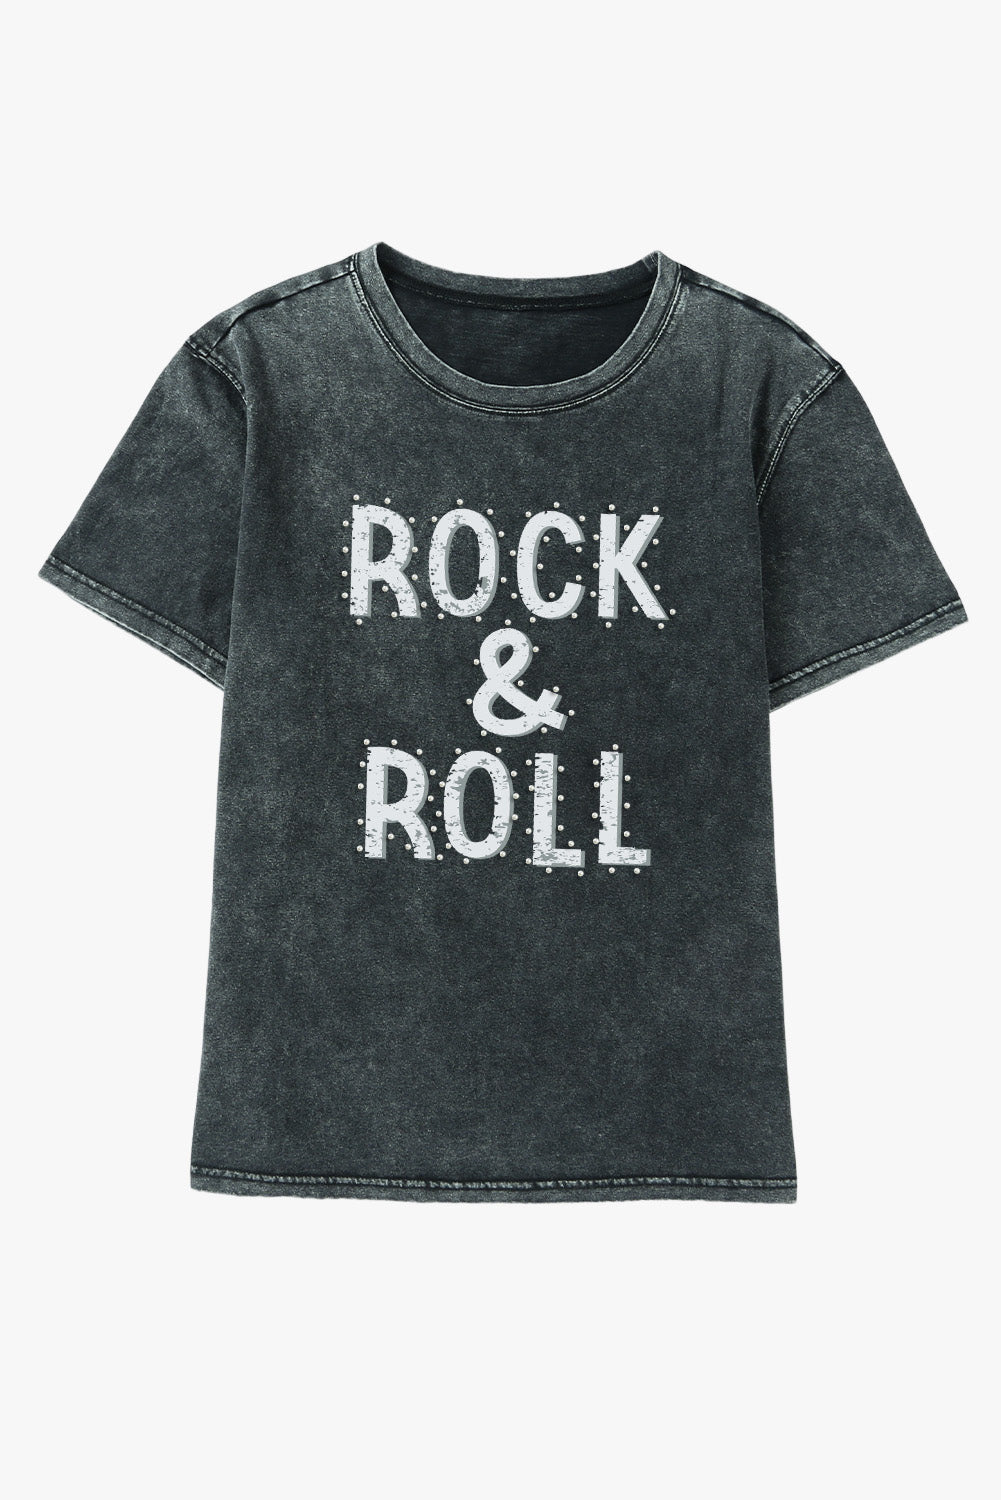 Black ROCK & ROLL Mineral Wash Crewneck T Shirt Graphic Tees JT's Designer Fashion